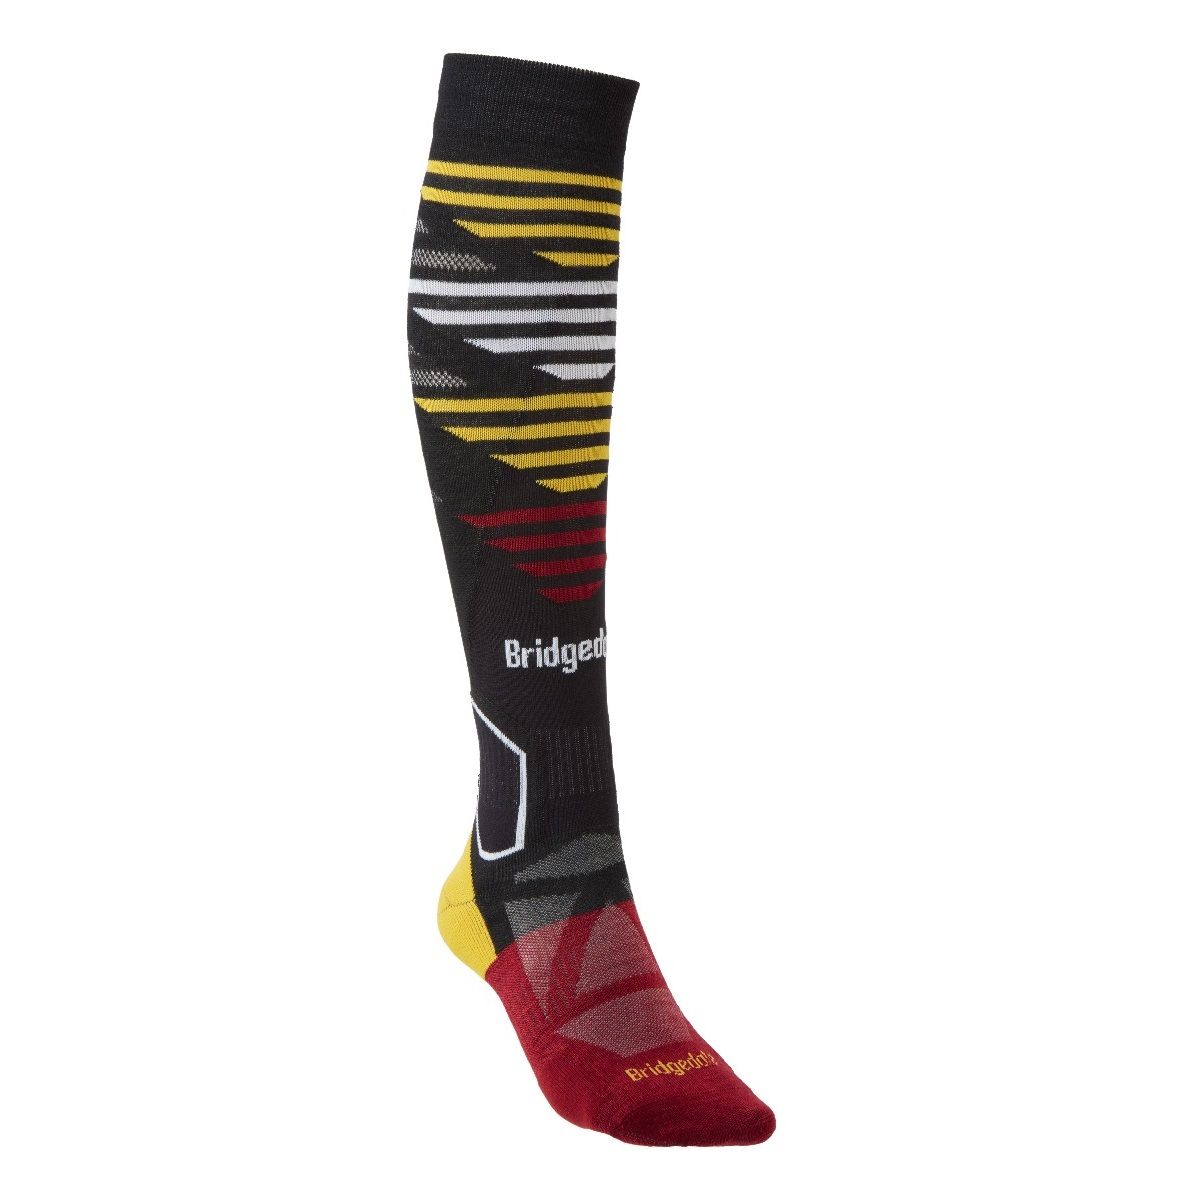 Bridgedale - Lightweight Merino Performance - Ski Sock - Graphite/Red